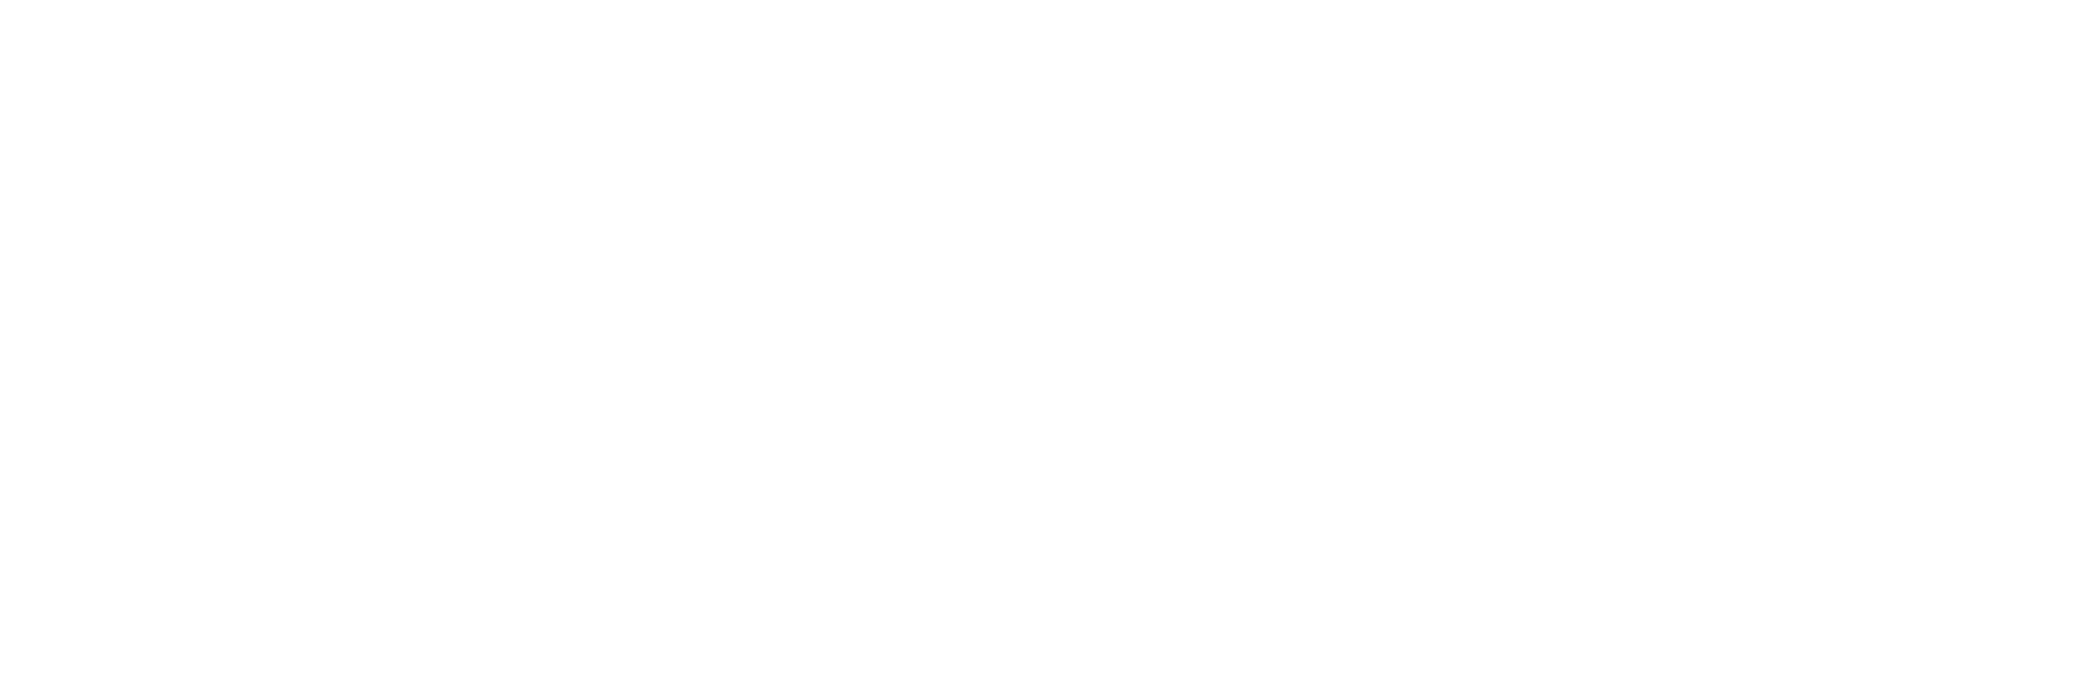 MRDVS logo white